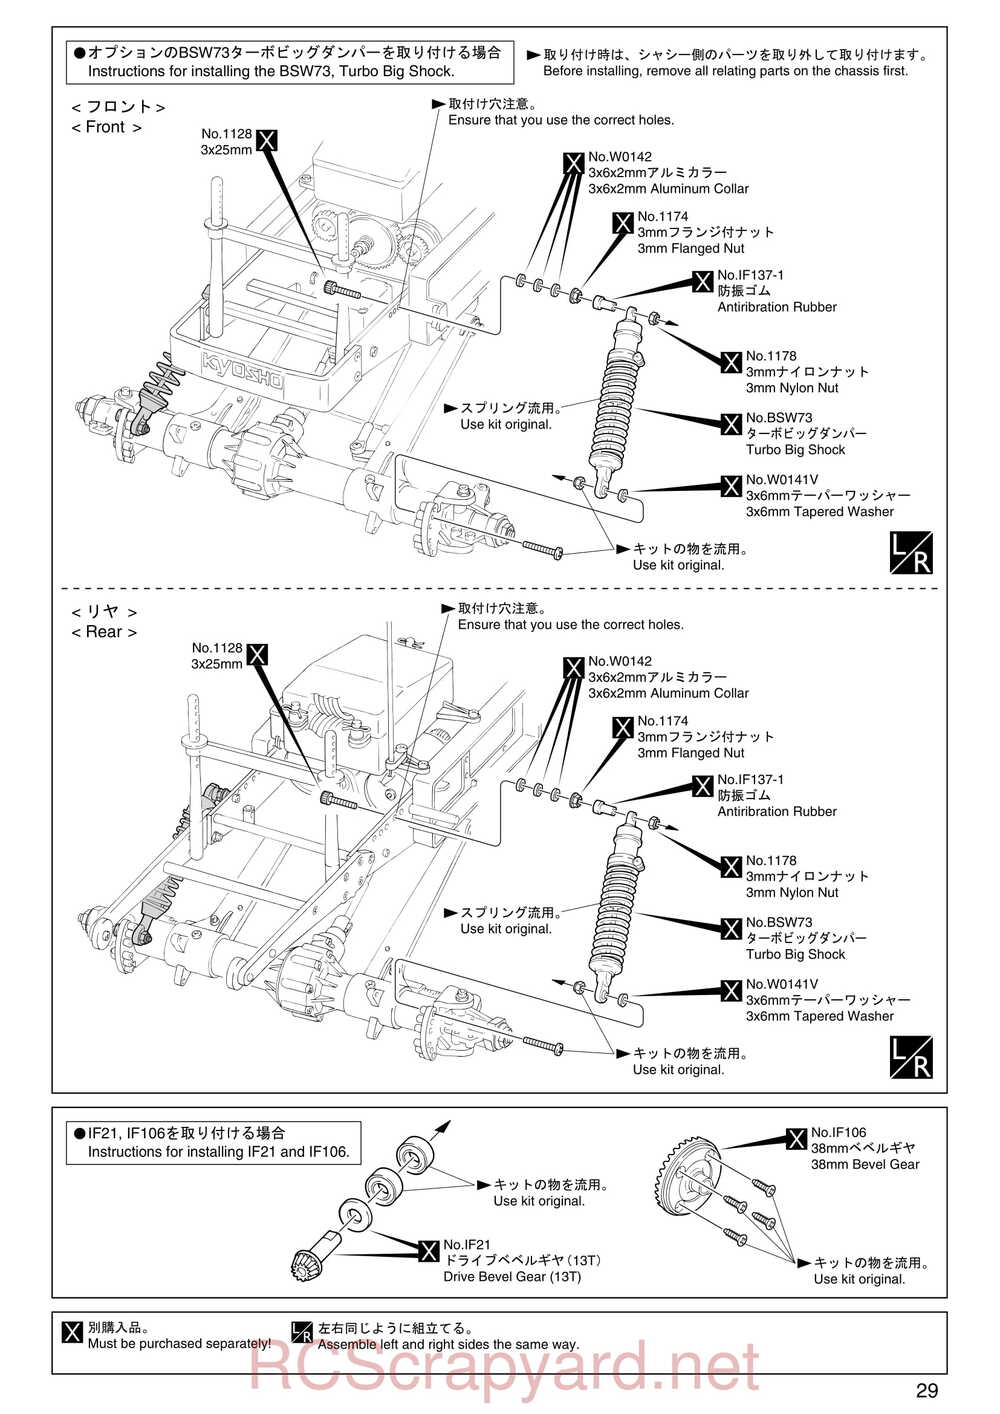 Kyosho - 30521b - Twin-Force - Manual - Page 29